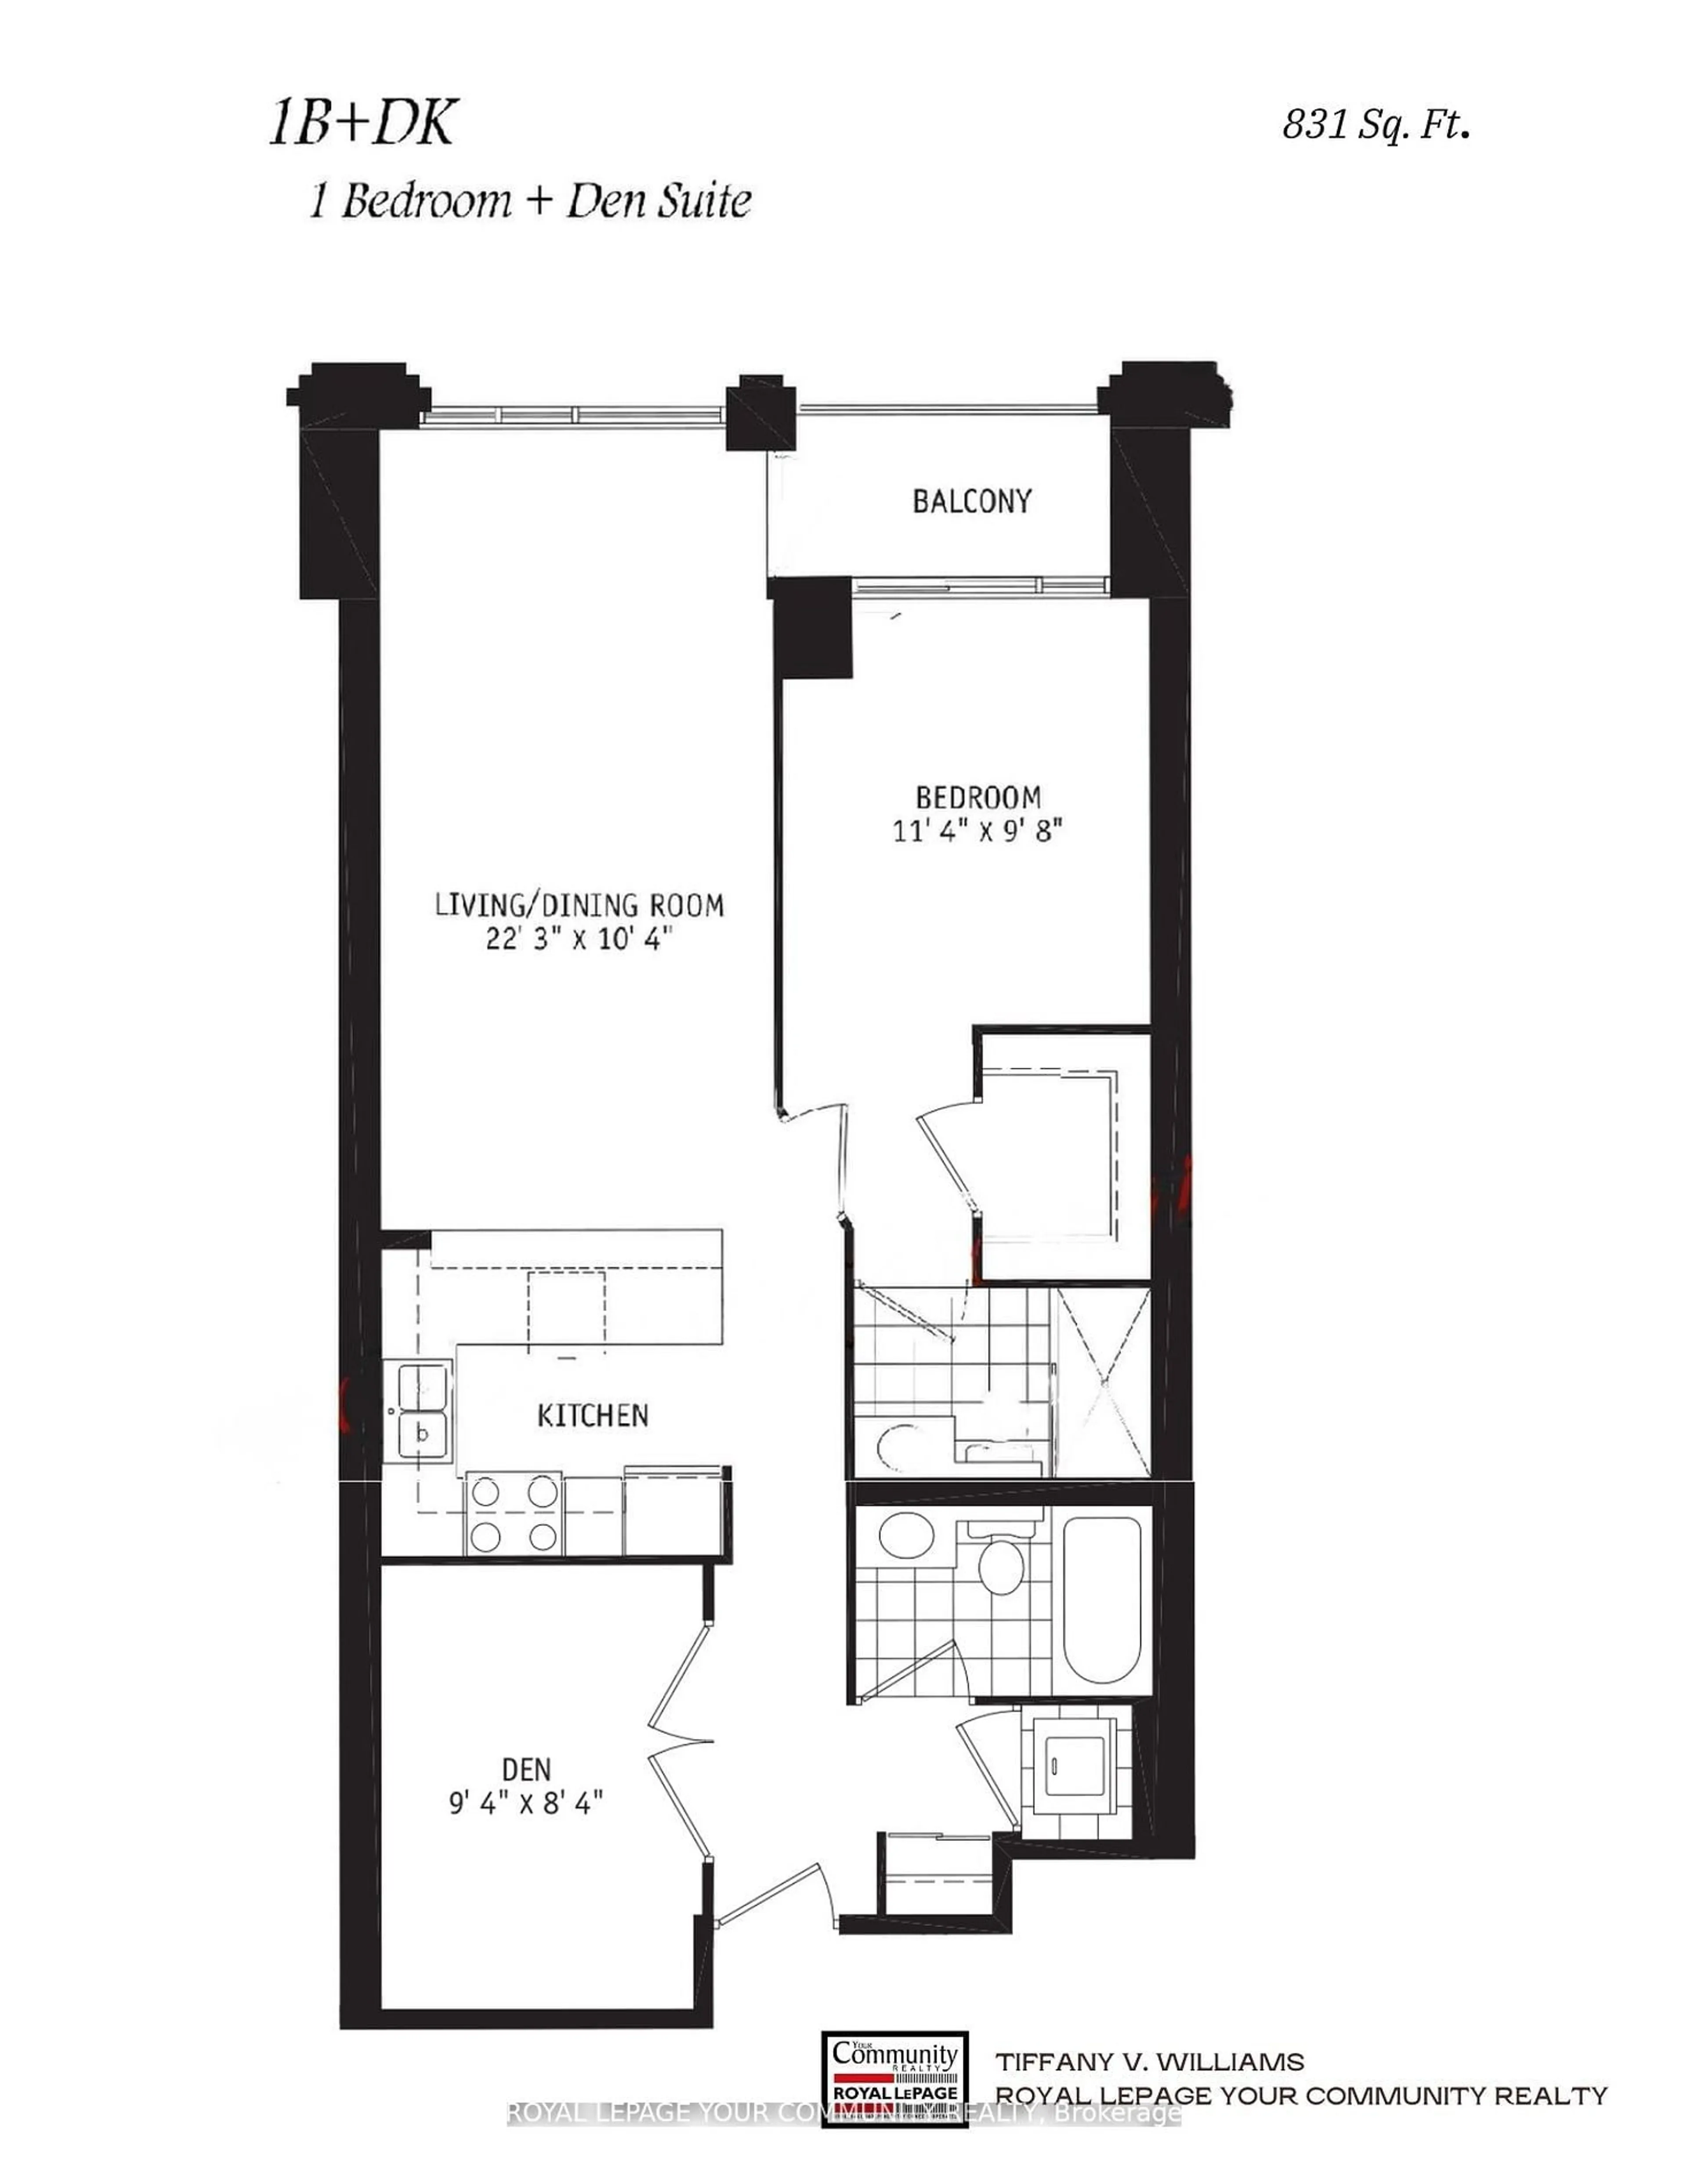 Floor plan for 628 Fleet St #605, Toronto Ontario M5V 1A8